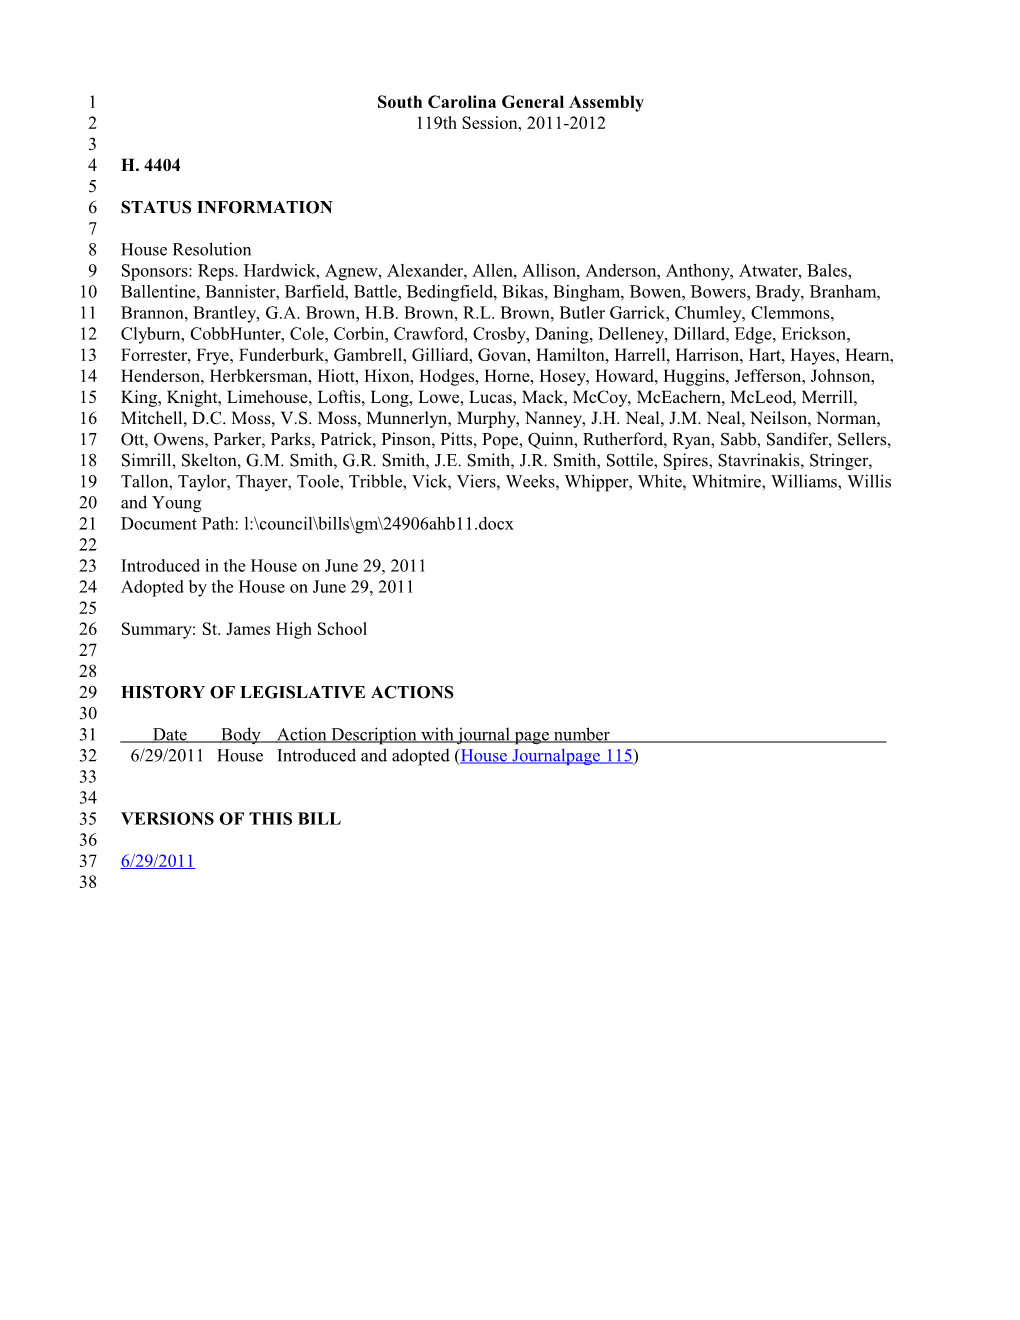 2011-2012 Bill 4404: St. James High School - South Carolina Legislature Online